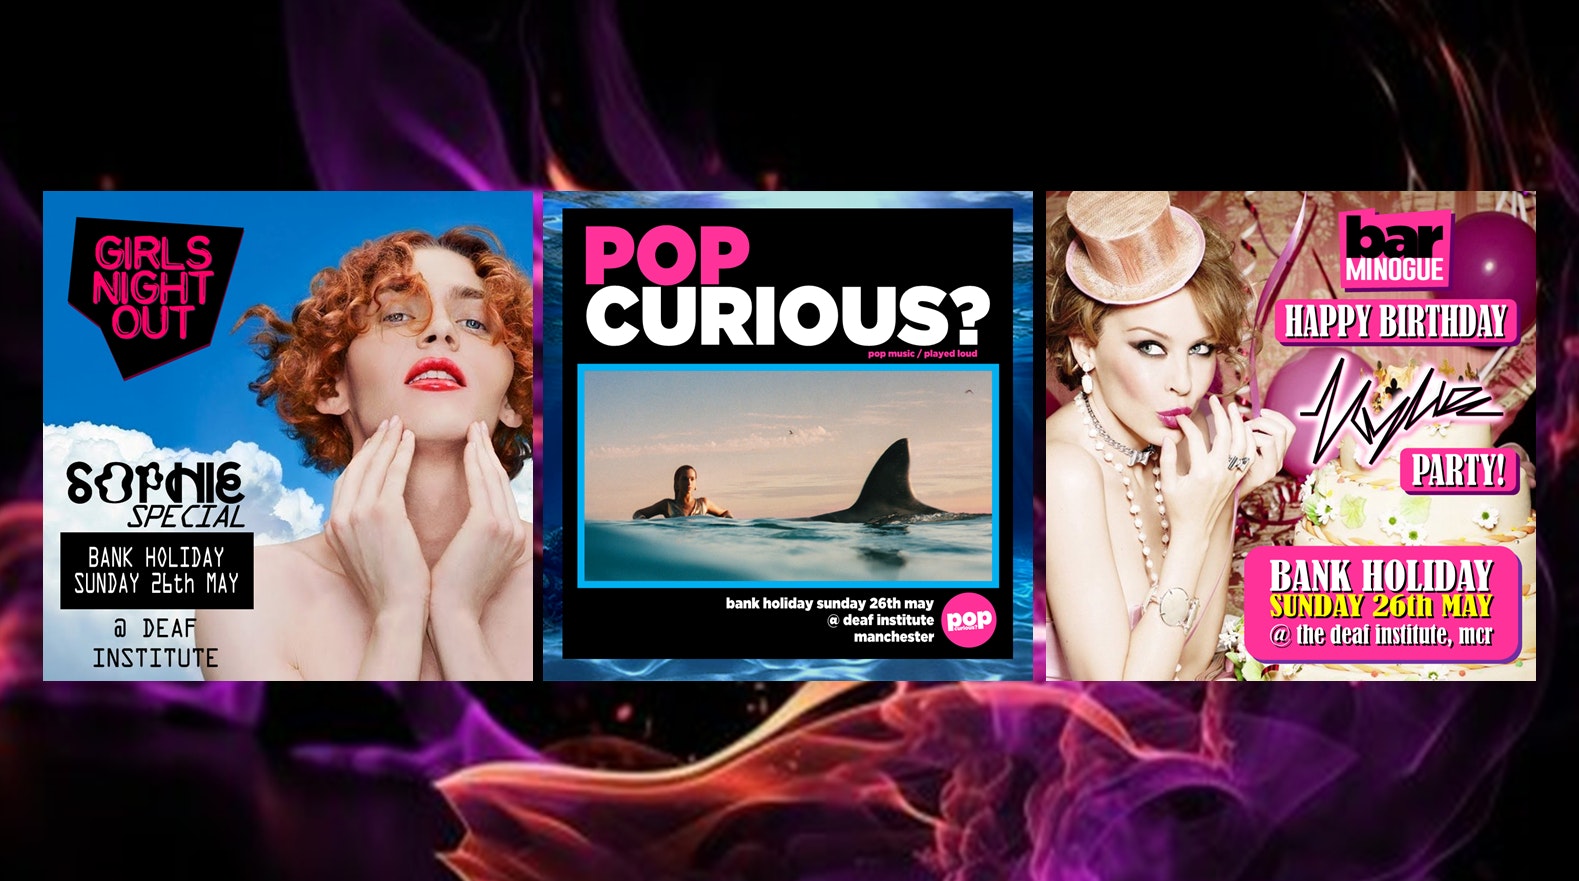 Girls Night Out + Pop Curious? + Bar Minogue